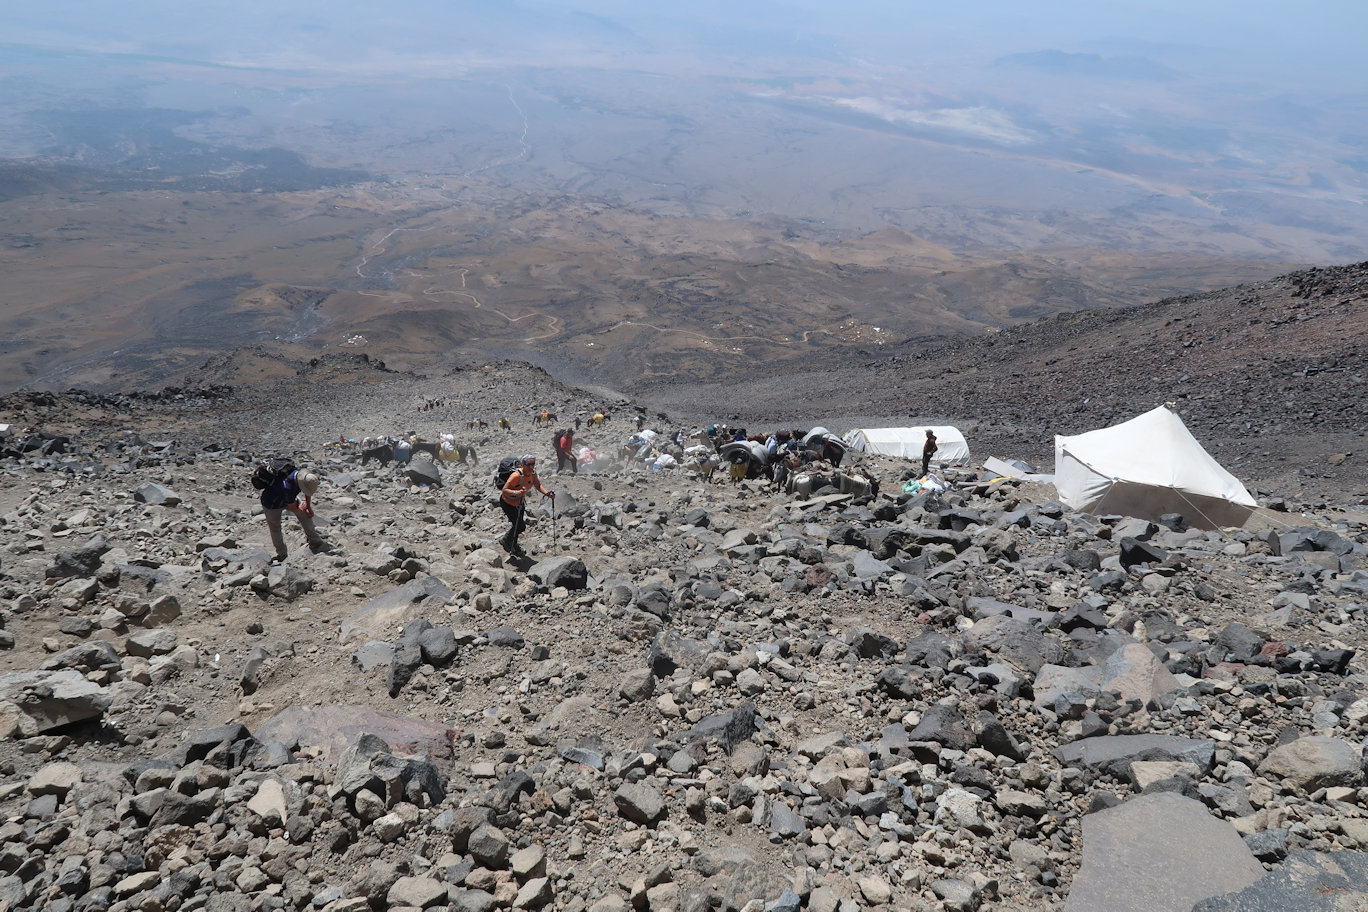 Mount Ararat Day 2-Camp 1 to 2